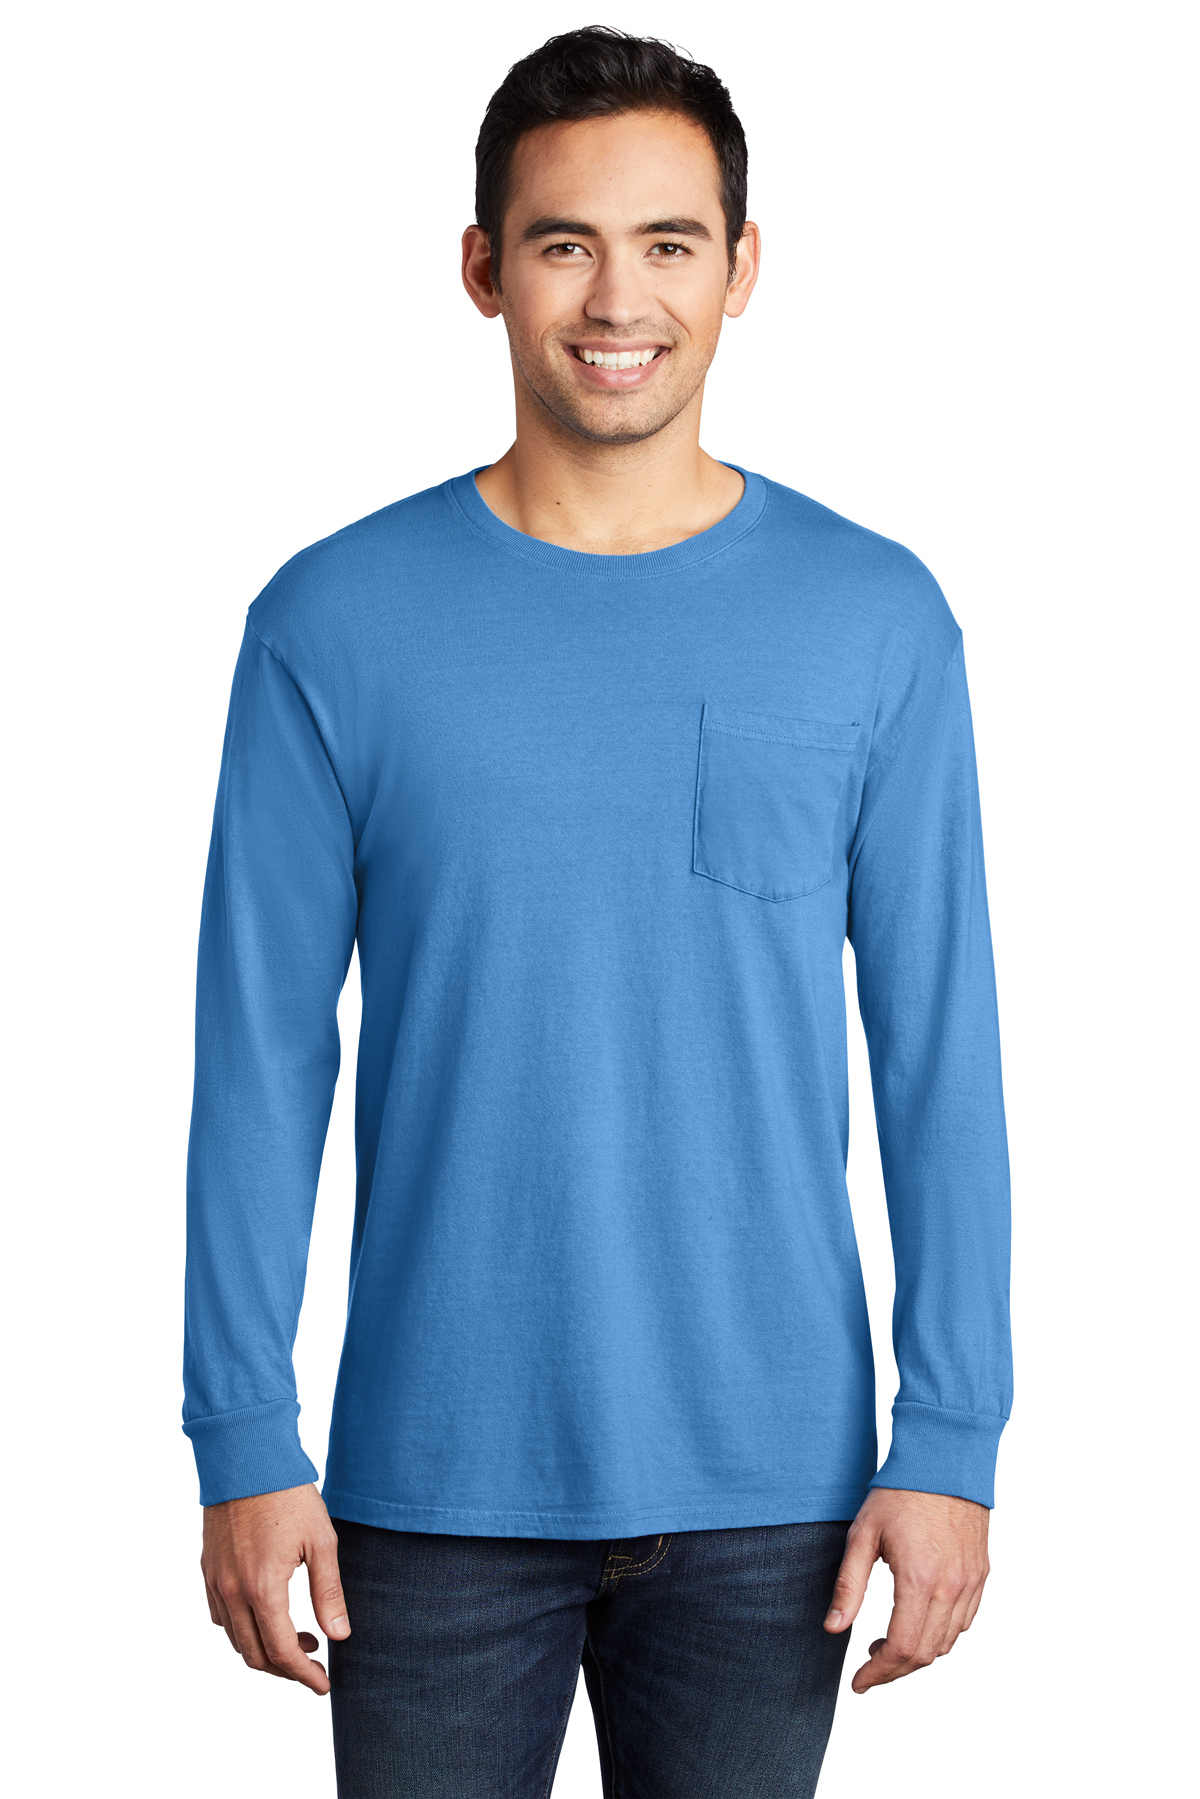 Port & Company Beach Wash Garment-Dyed Long Sleeve Pocket Tee | Product |  Port & Company | T-Shirts